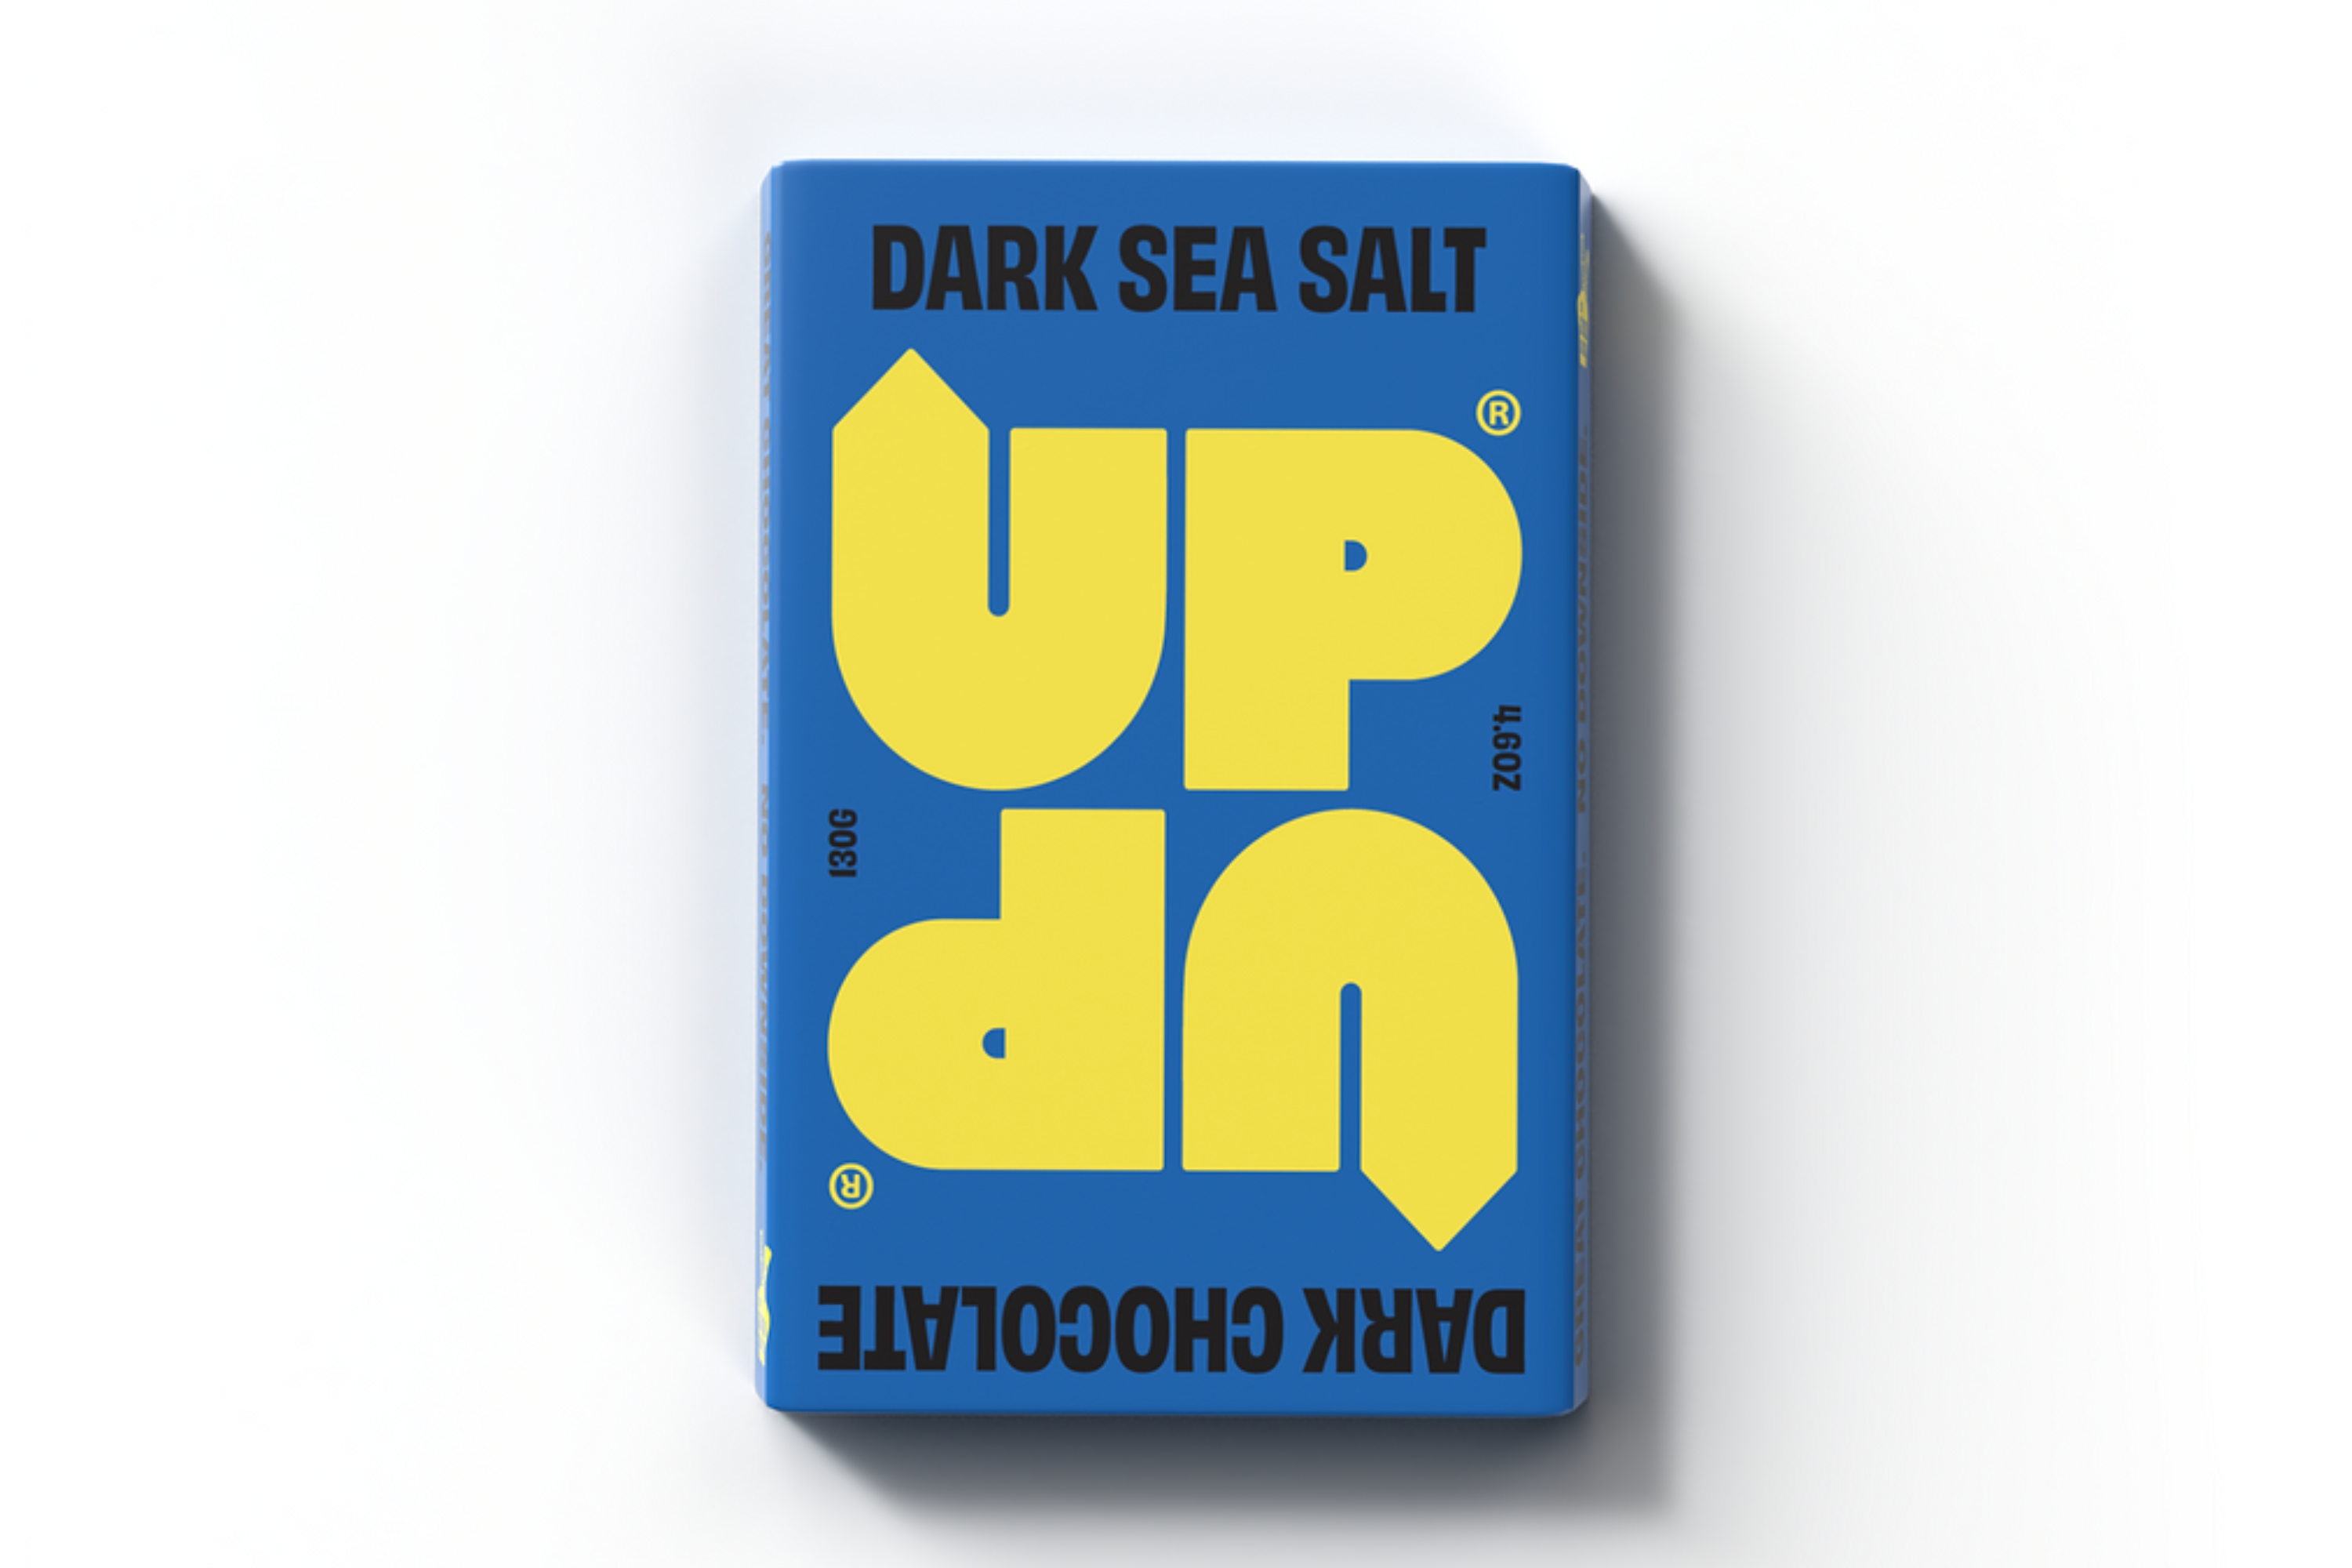 SEA SALT / DARK